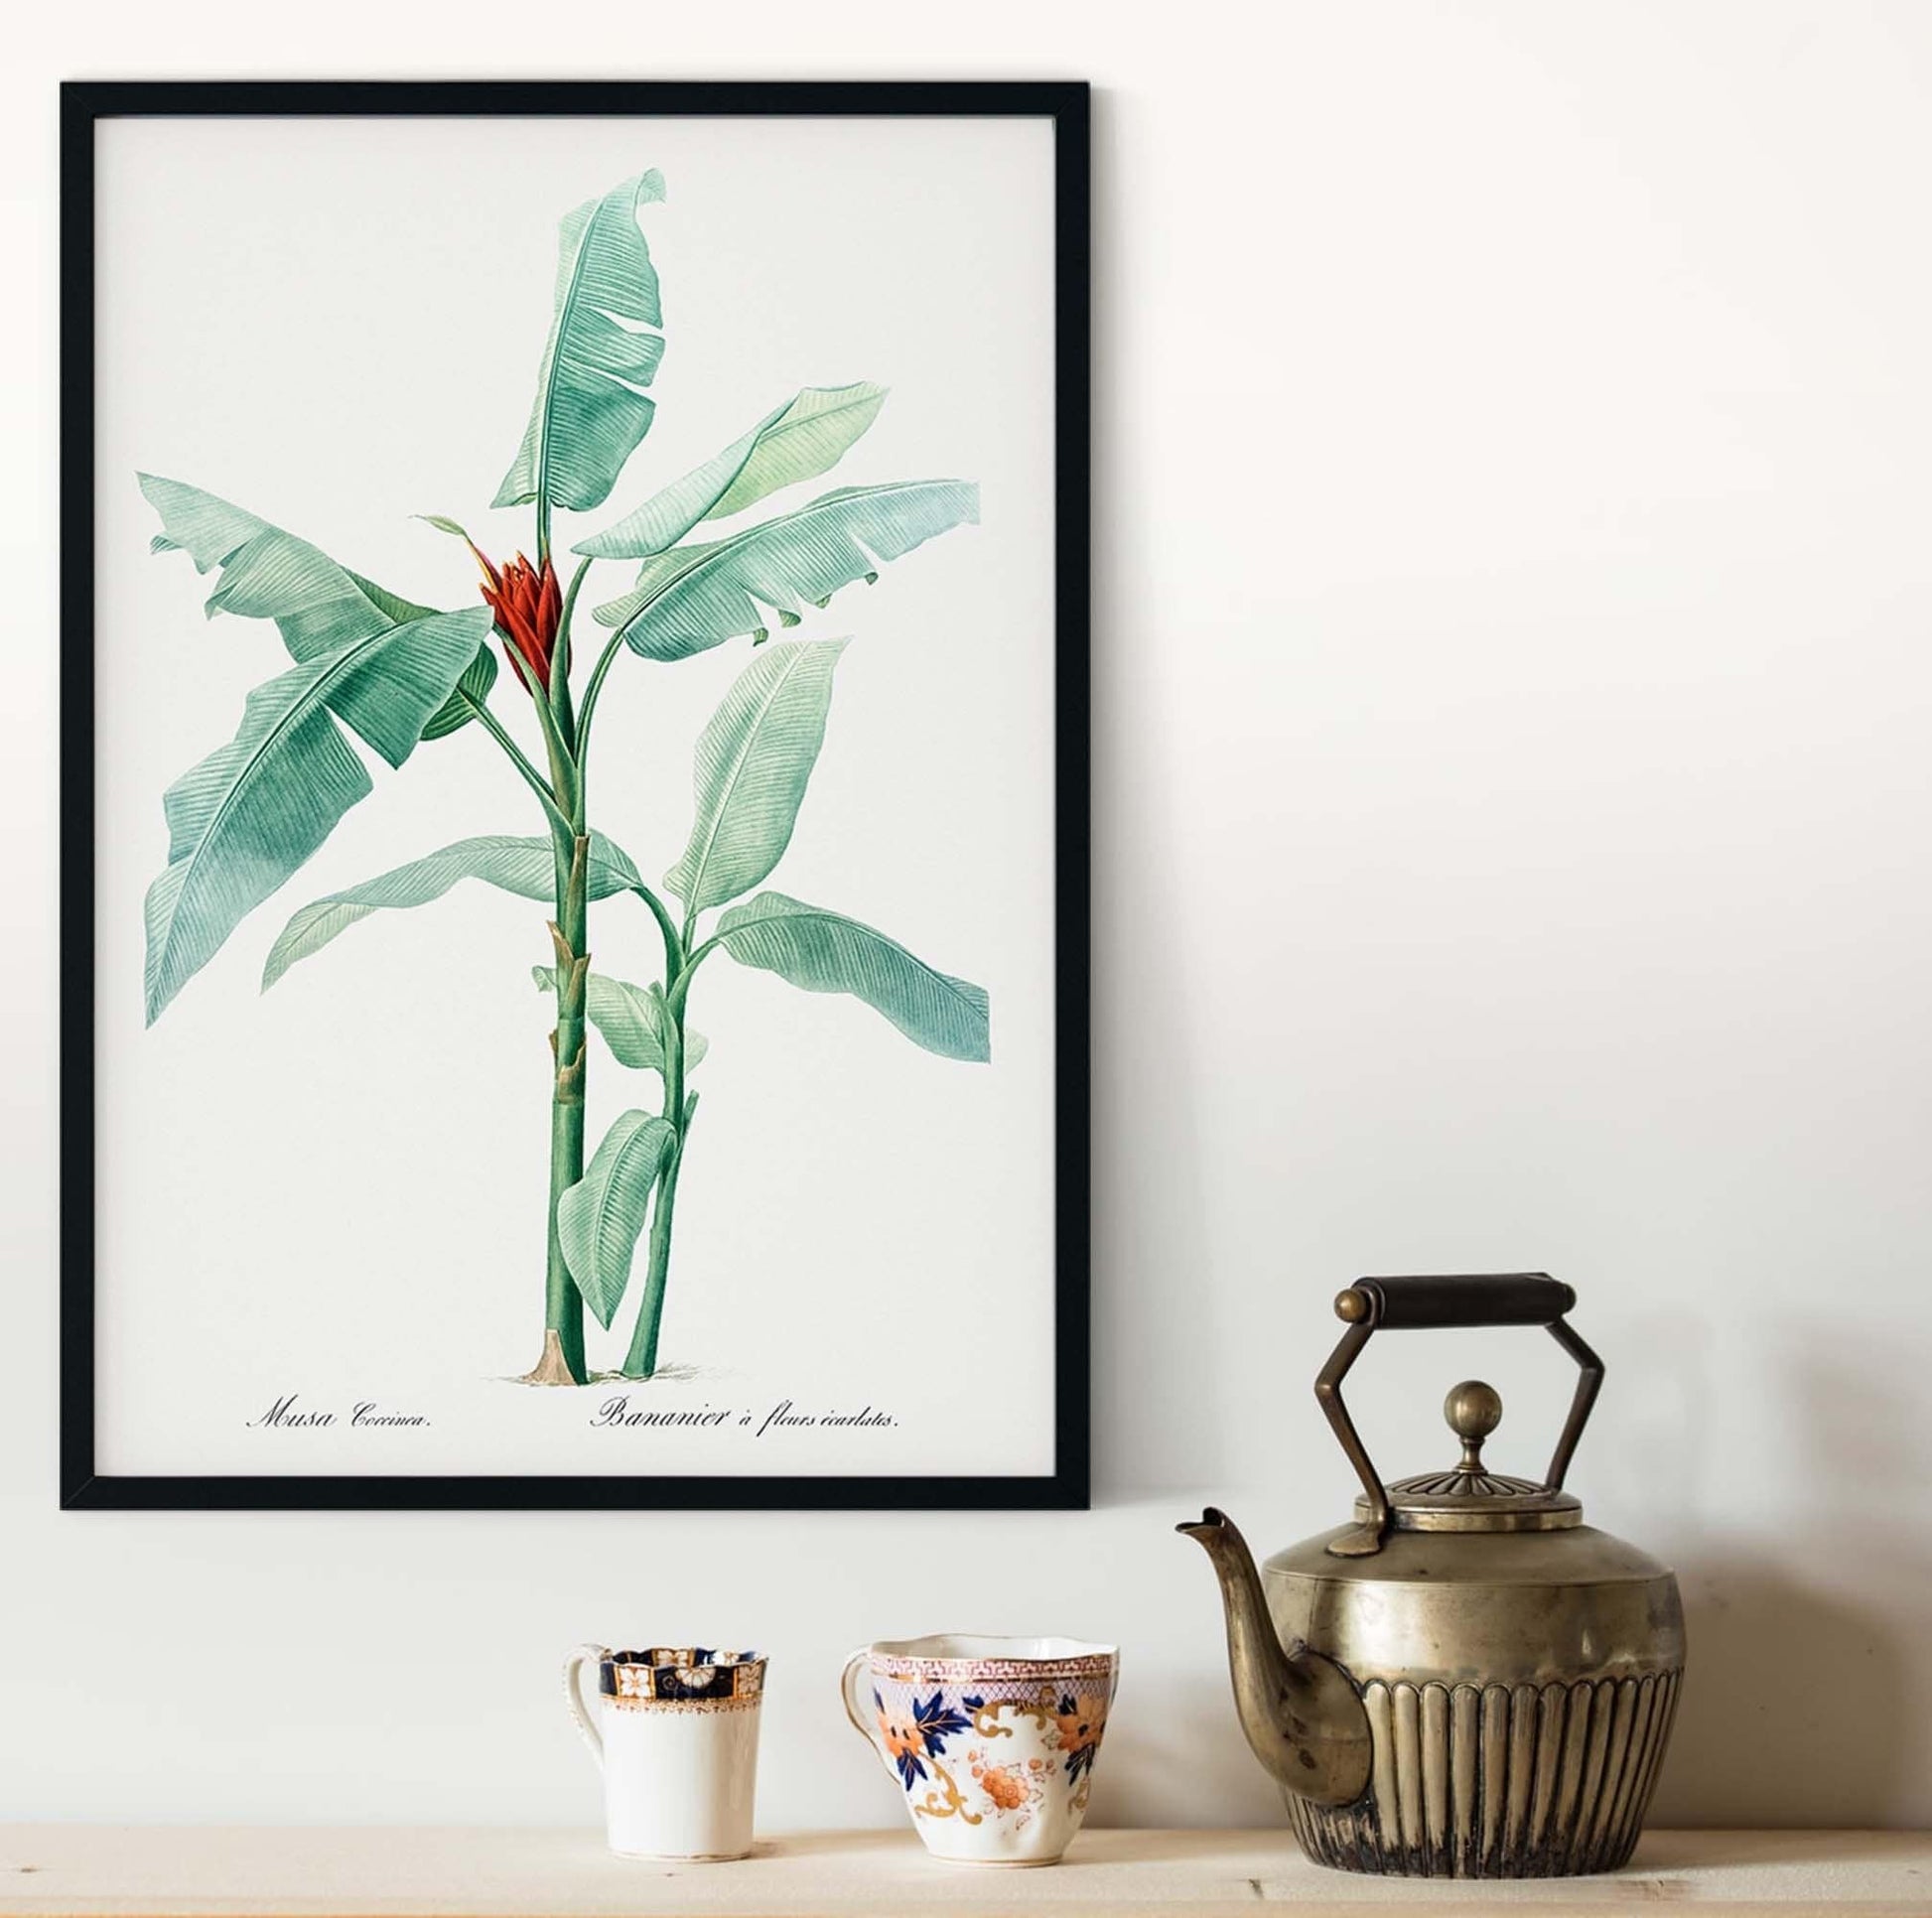 Scarlet Banana botanical Illustration Print, scientific drawing, nature illustration print